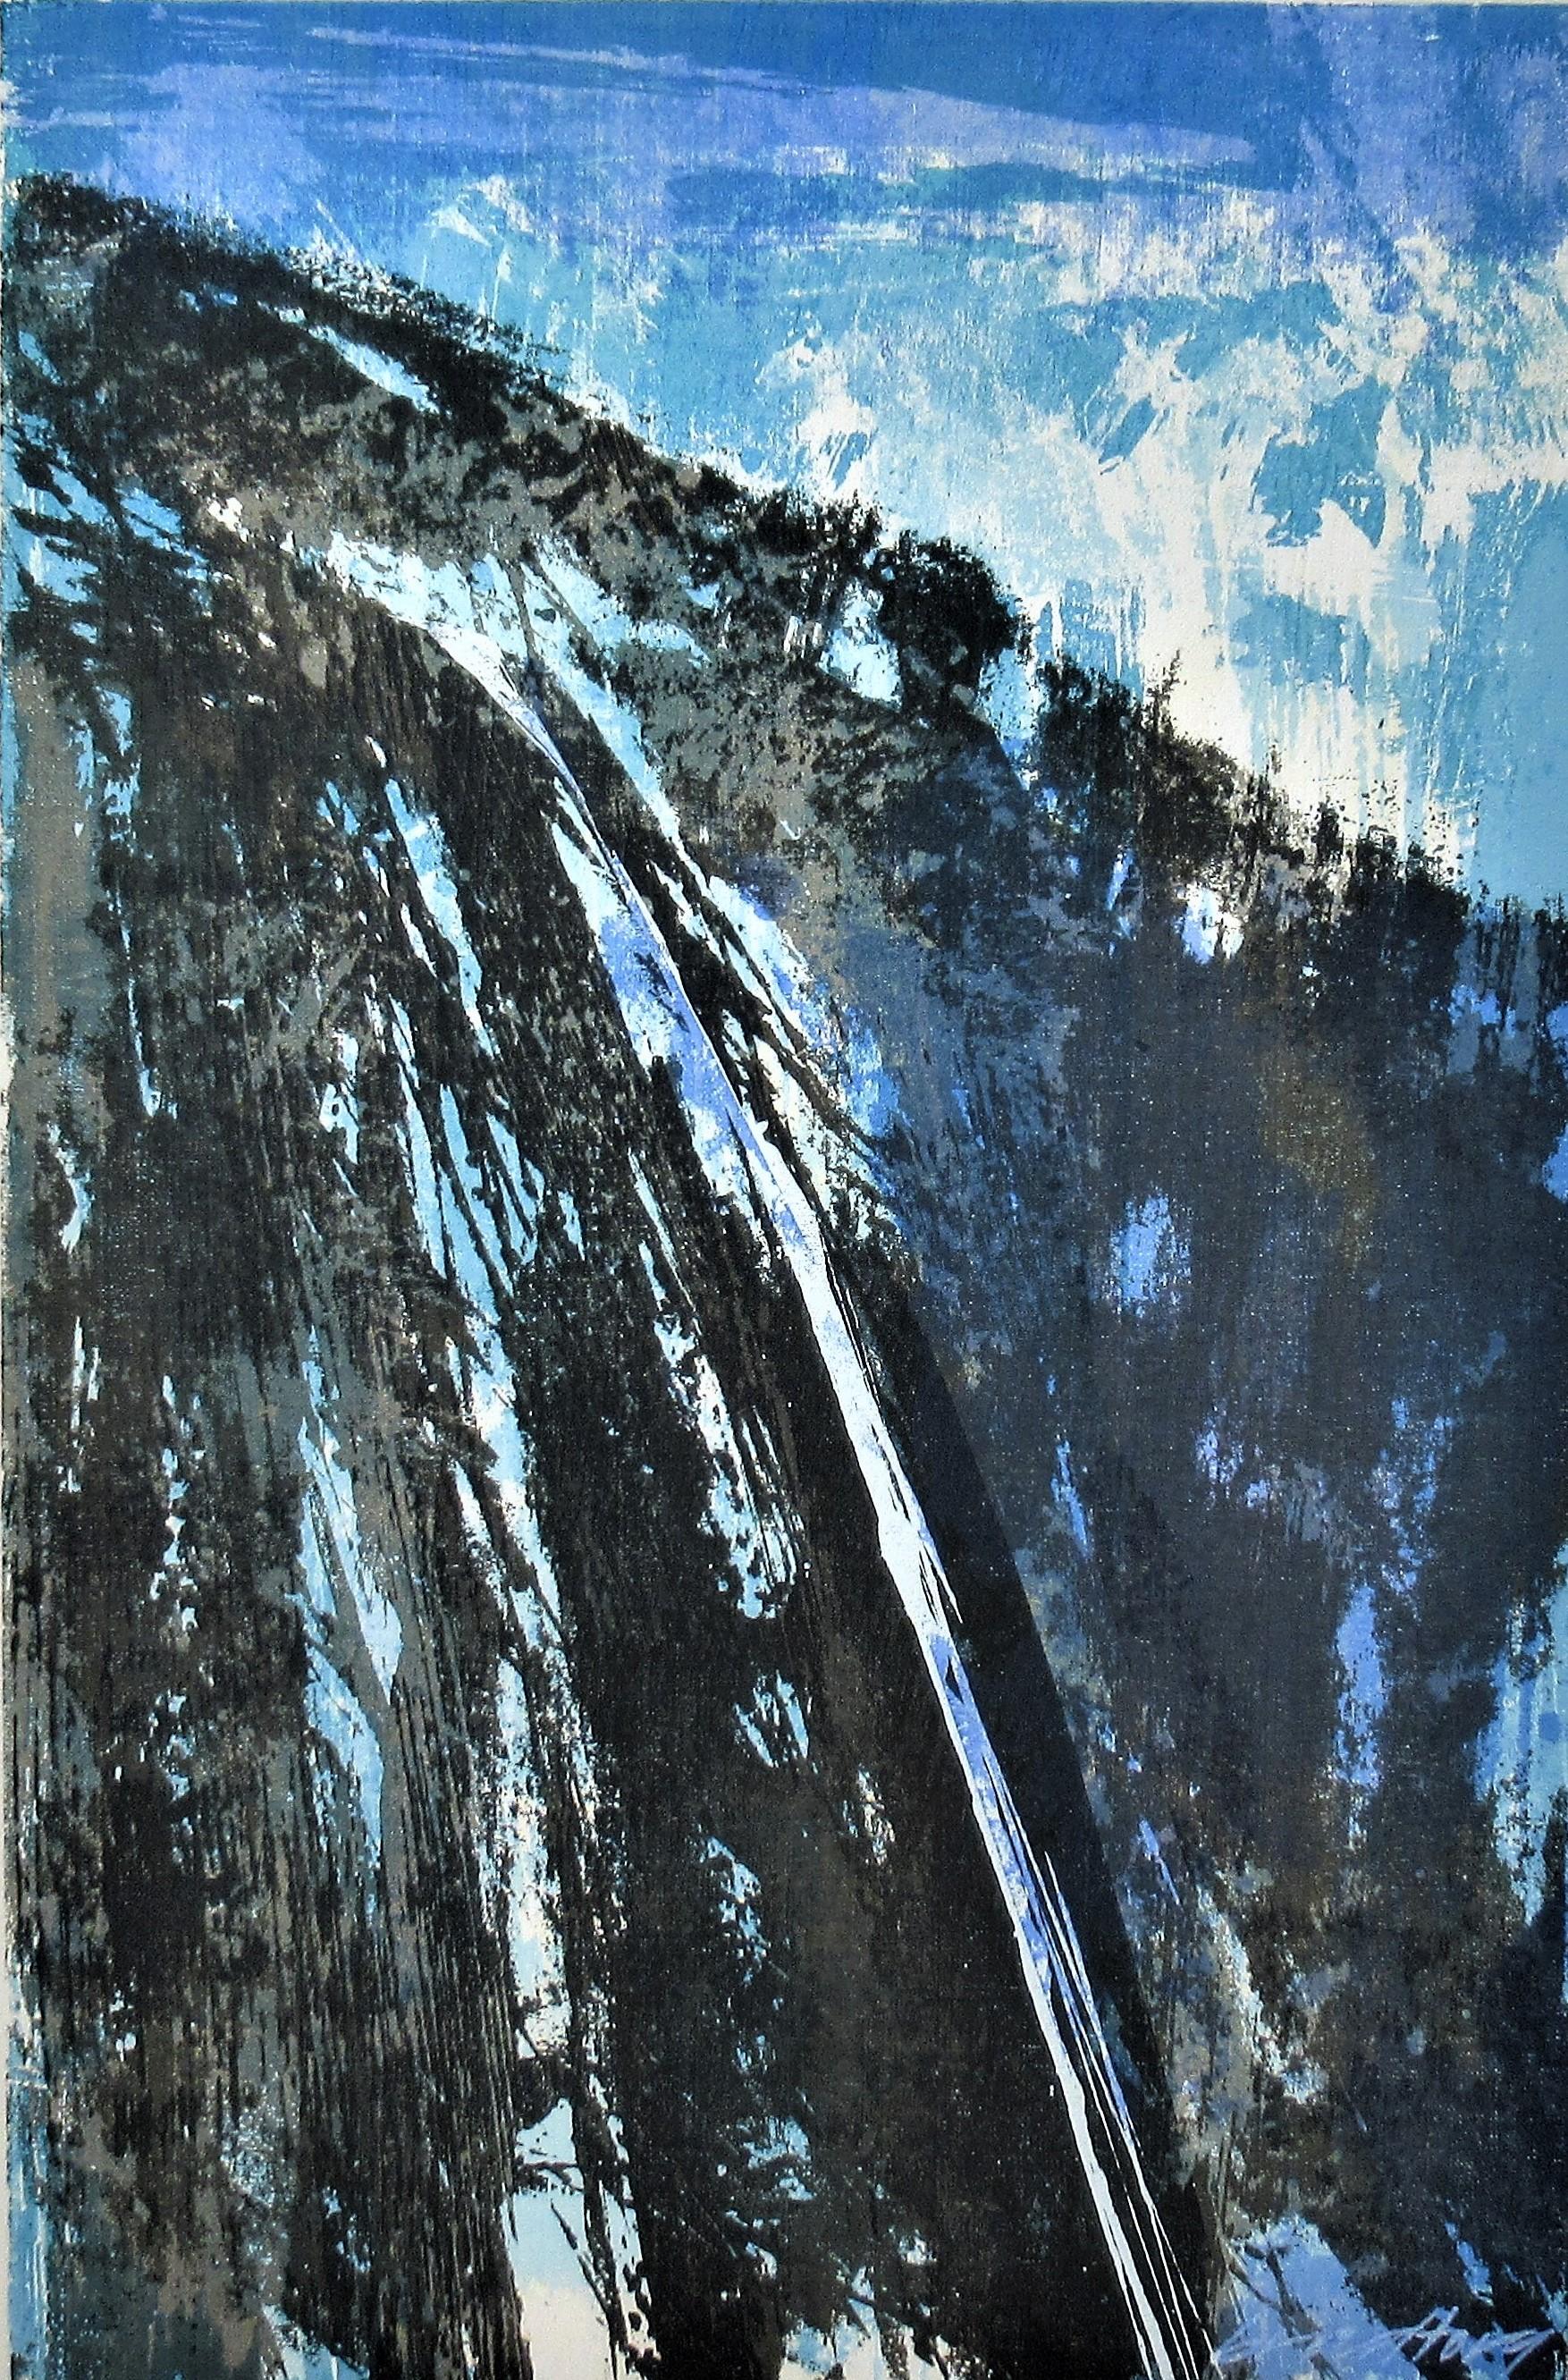 Waterfall #2 - Print by Howard Bradford